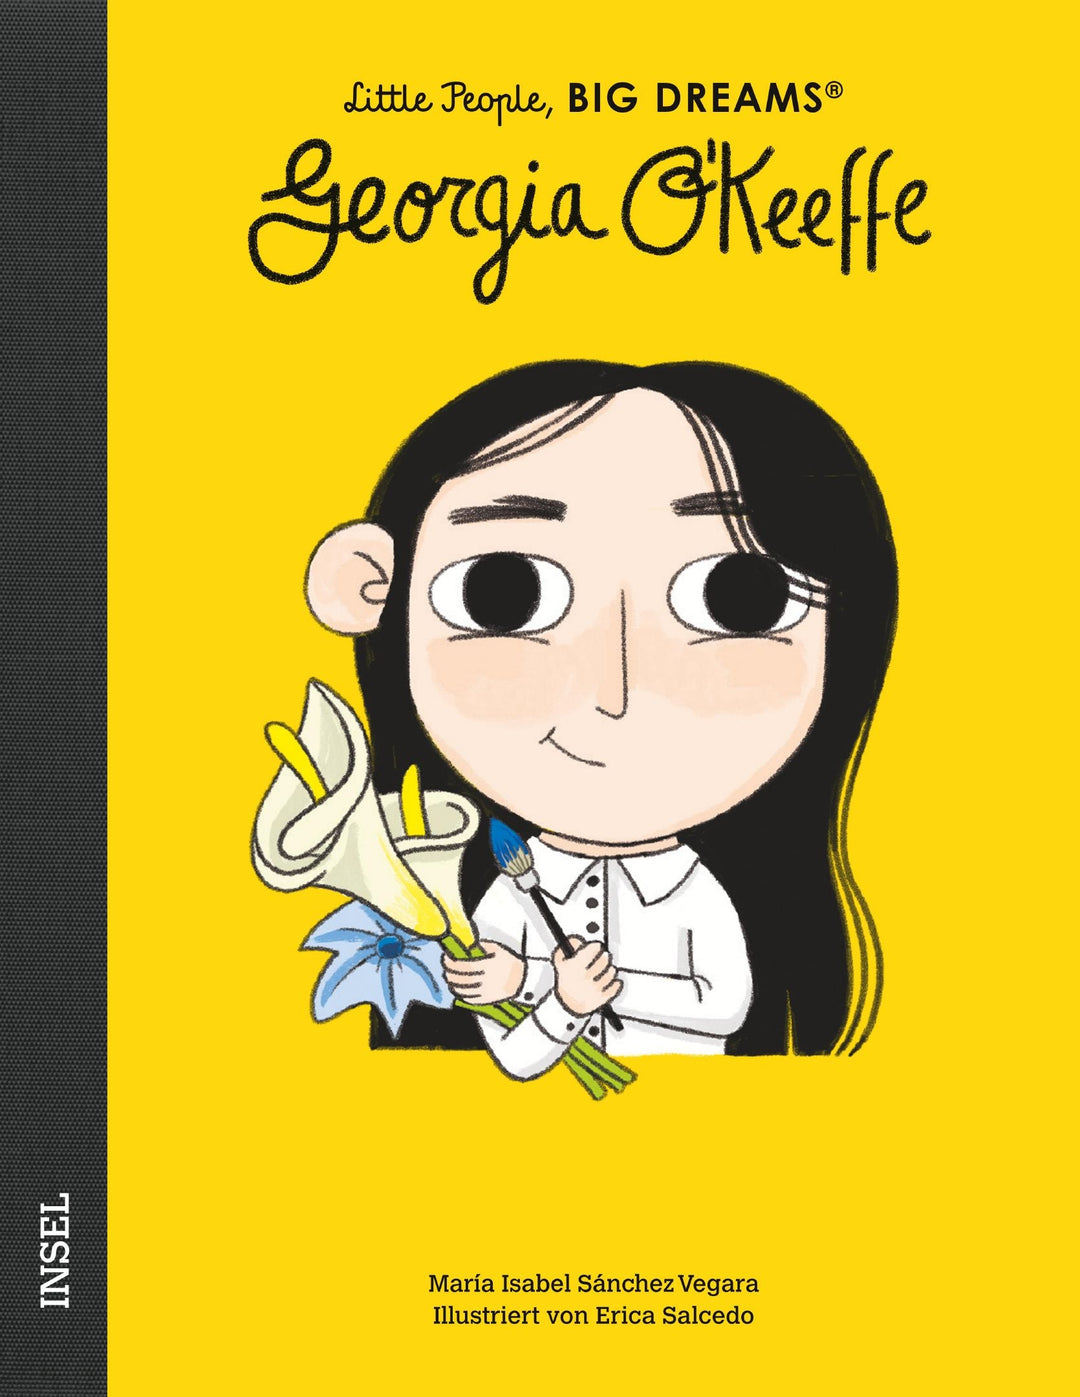 Insel Verlag Bilderbuch Little People, Big Dreams auf Deutsch: Georgia O'Keeffe